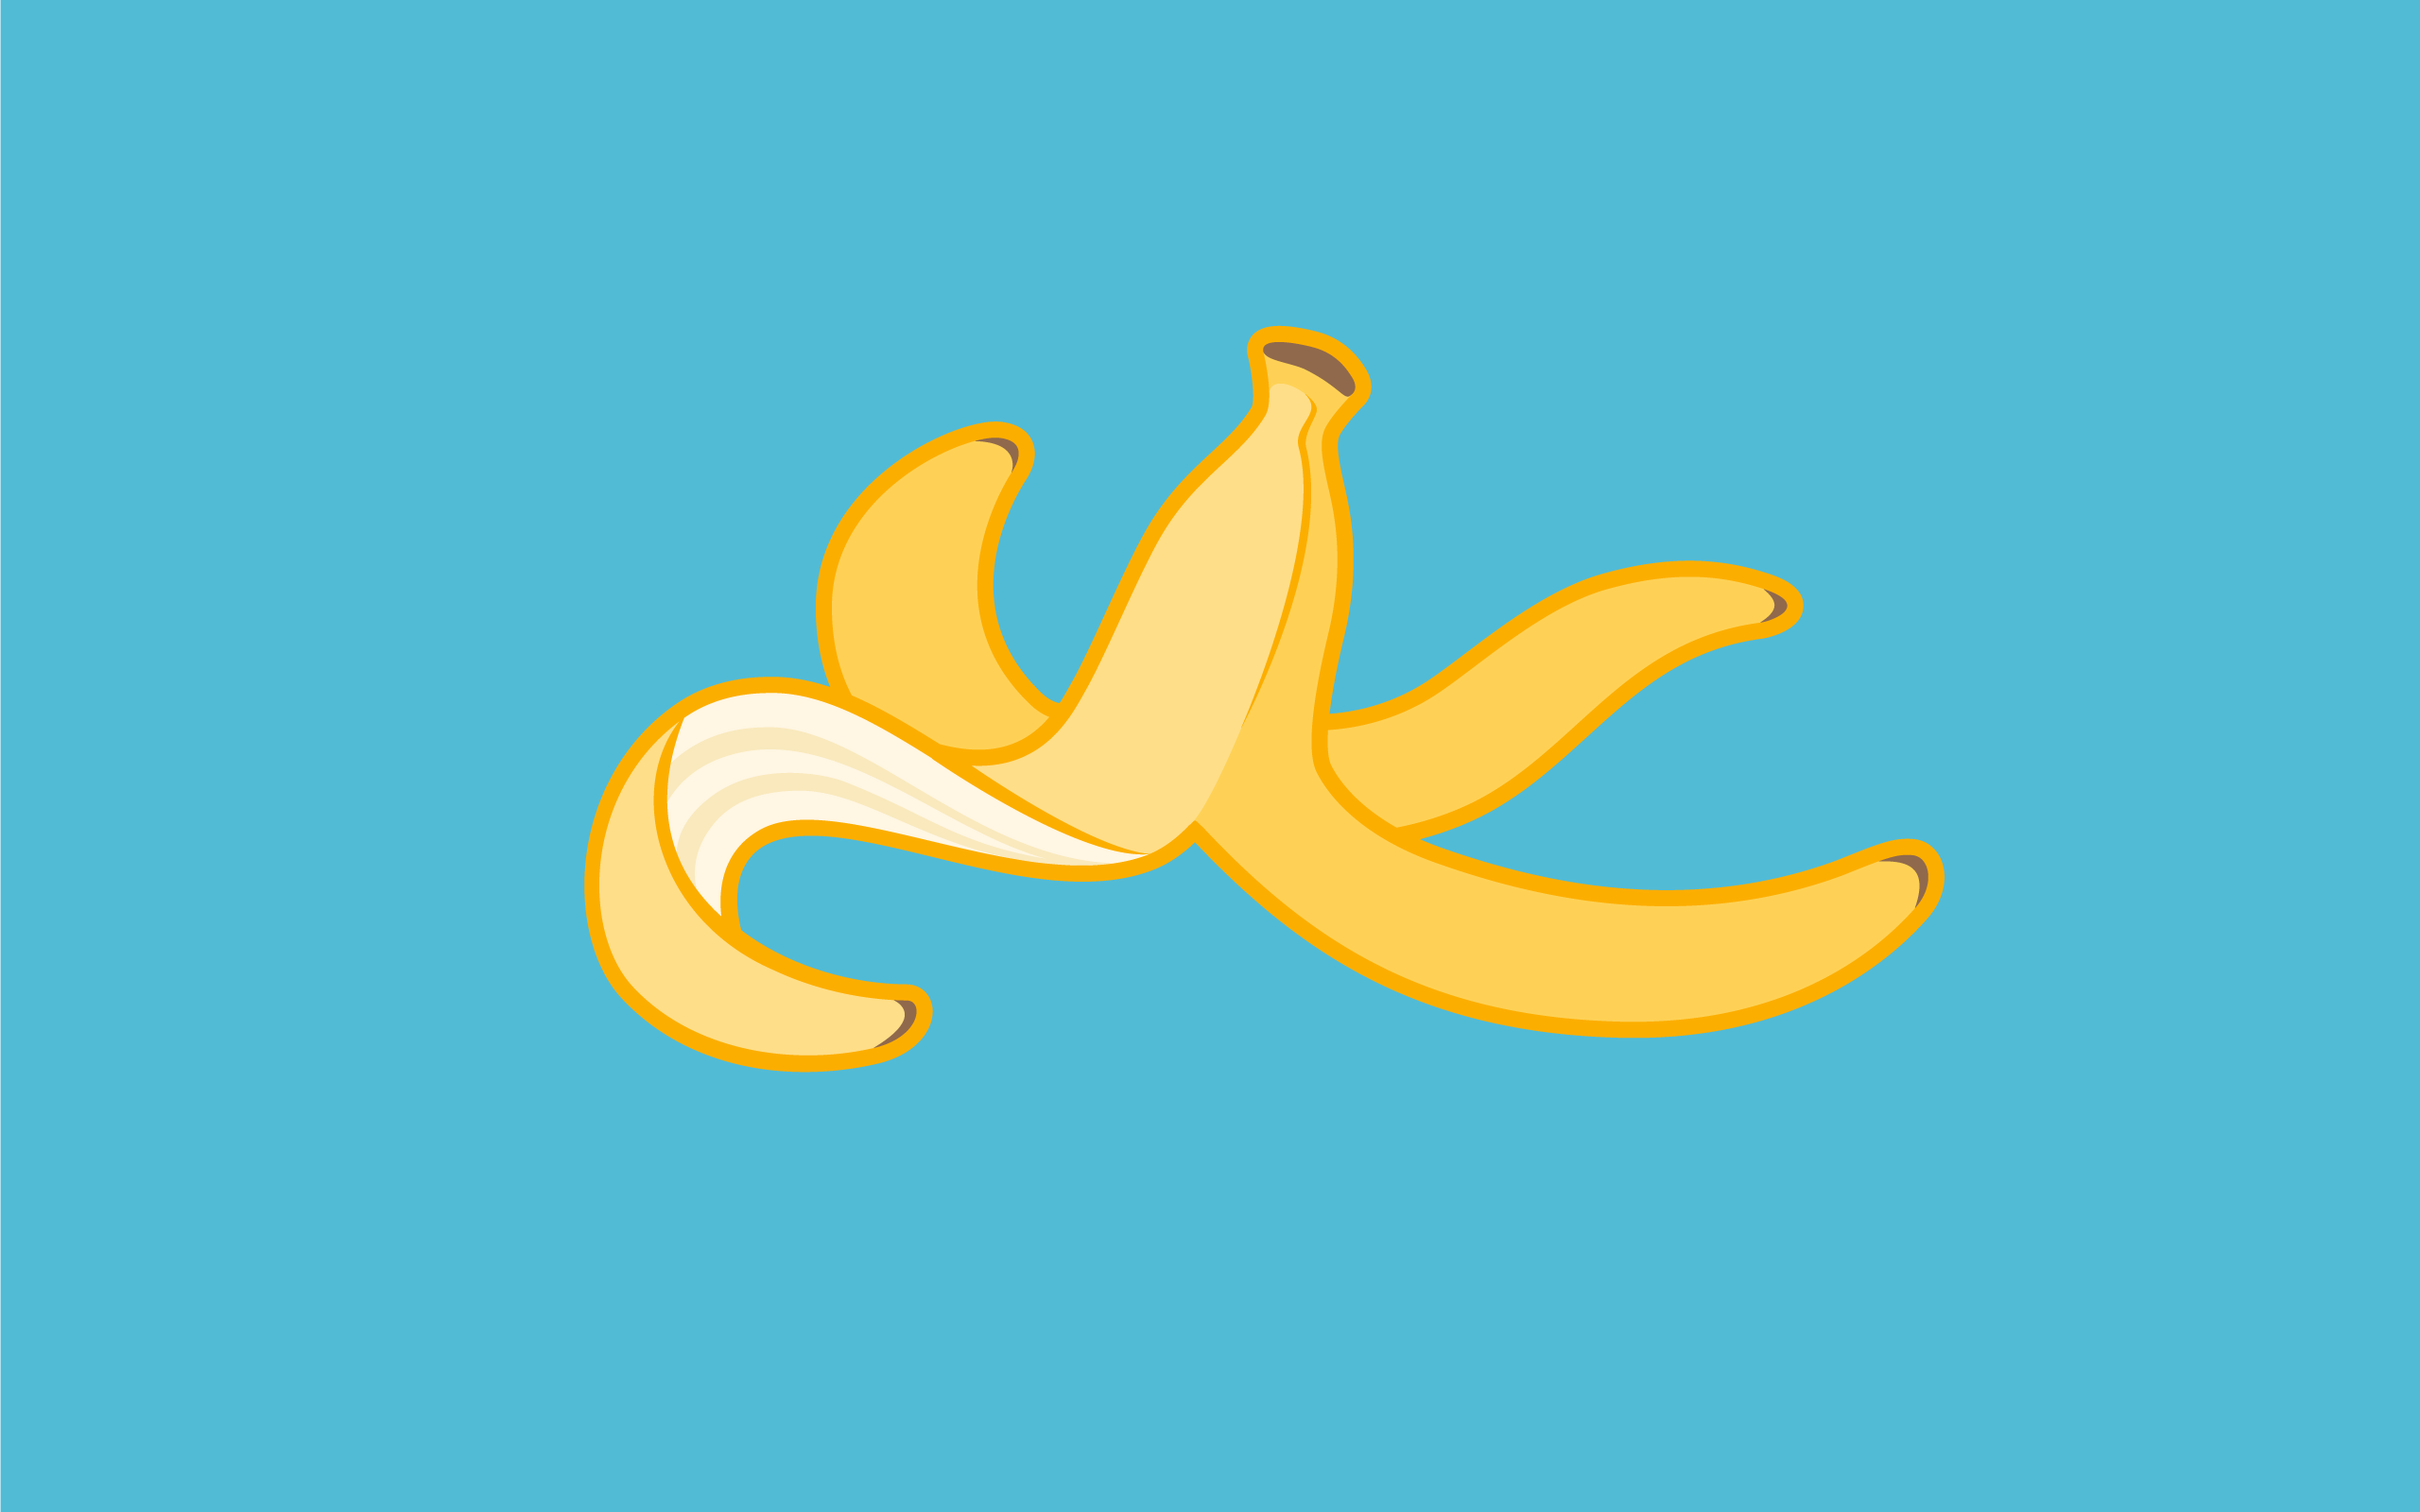 Dribbble - banana-peel.png by Dustin Tanner